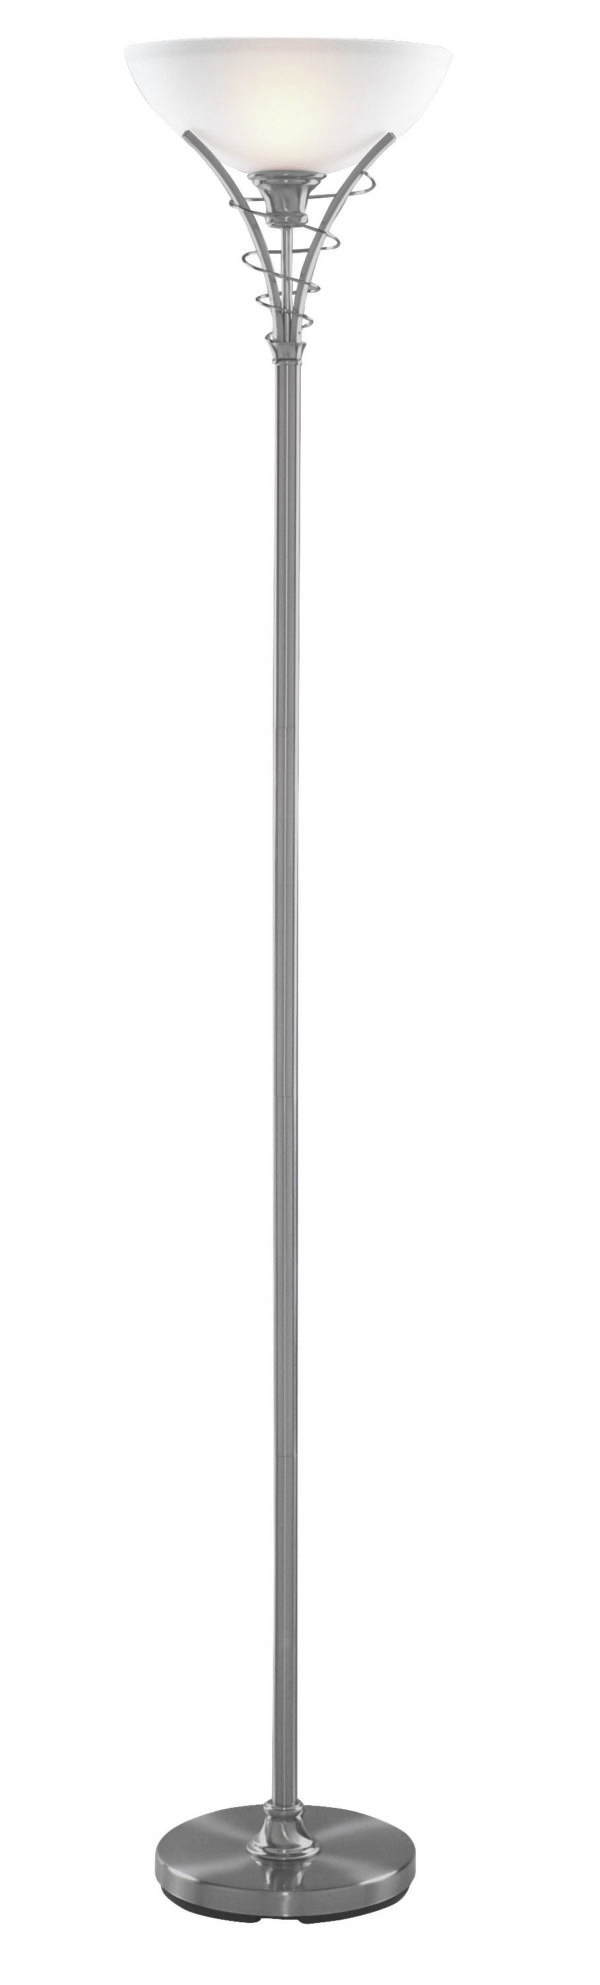 Linea Floor Lamp - shown in Satin Chrome